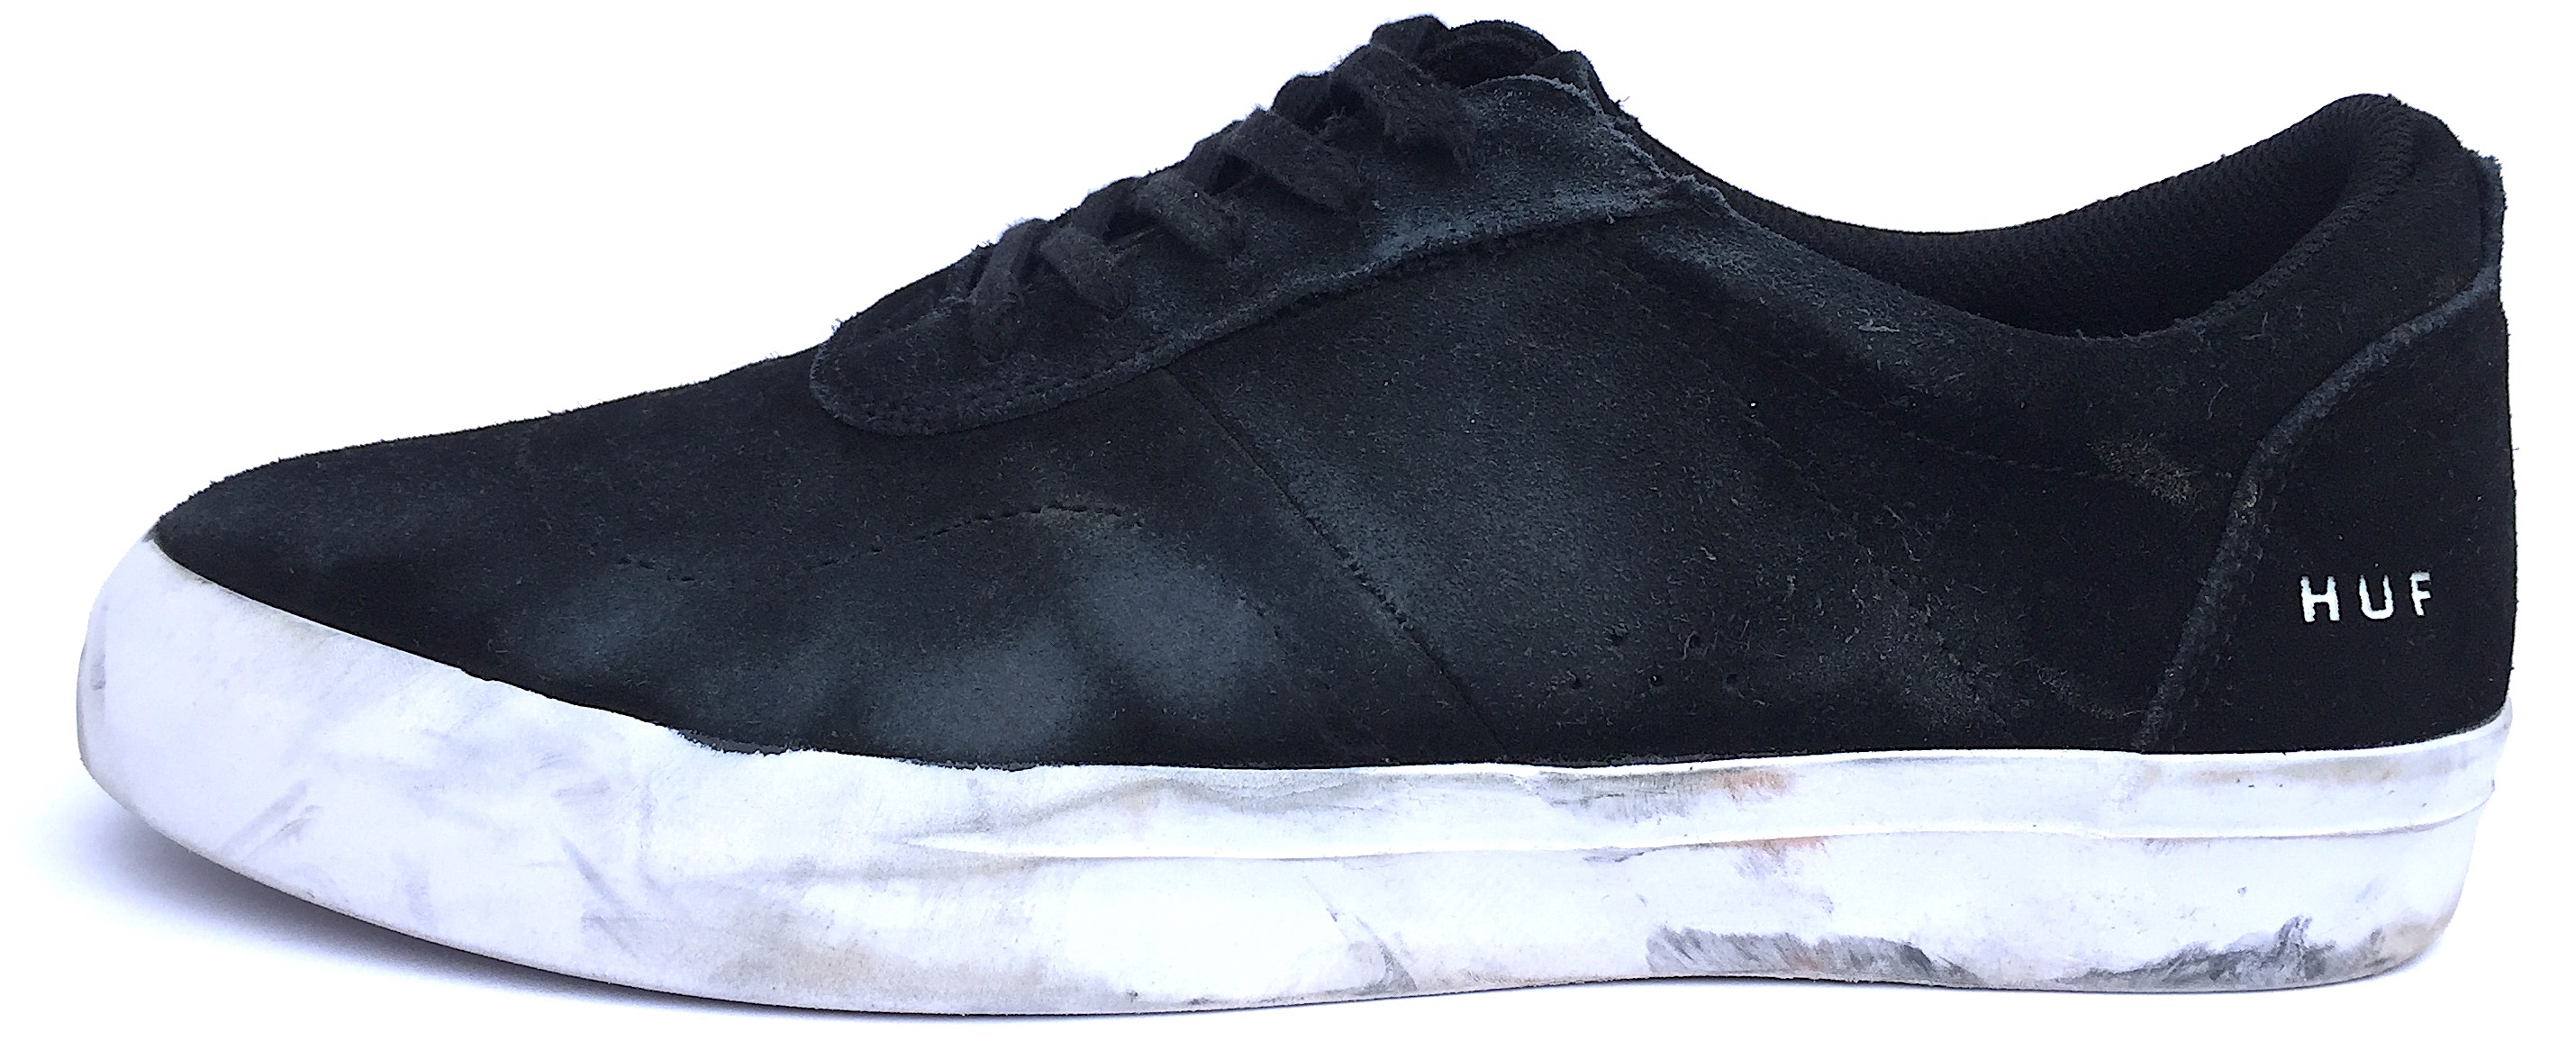 Huf Worldwide Footwear Skate Schuhe Shoes Brad Cromer Black White Canvas 11,5/45 